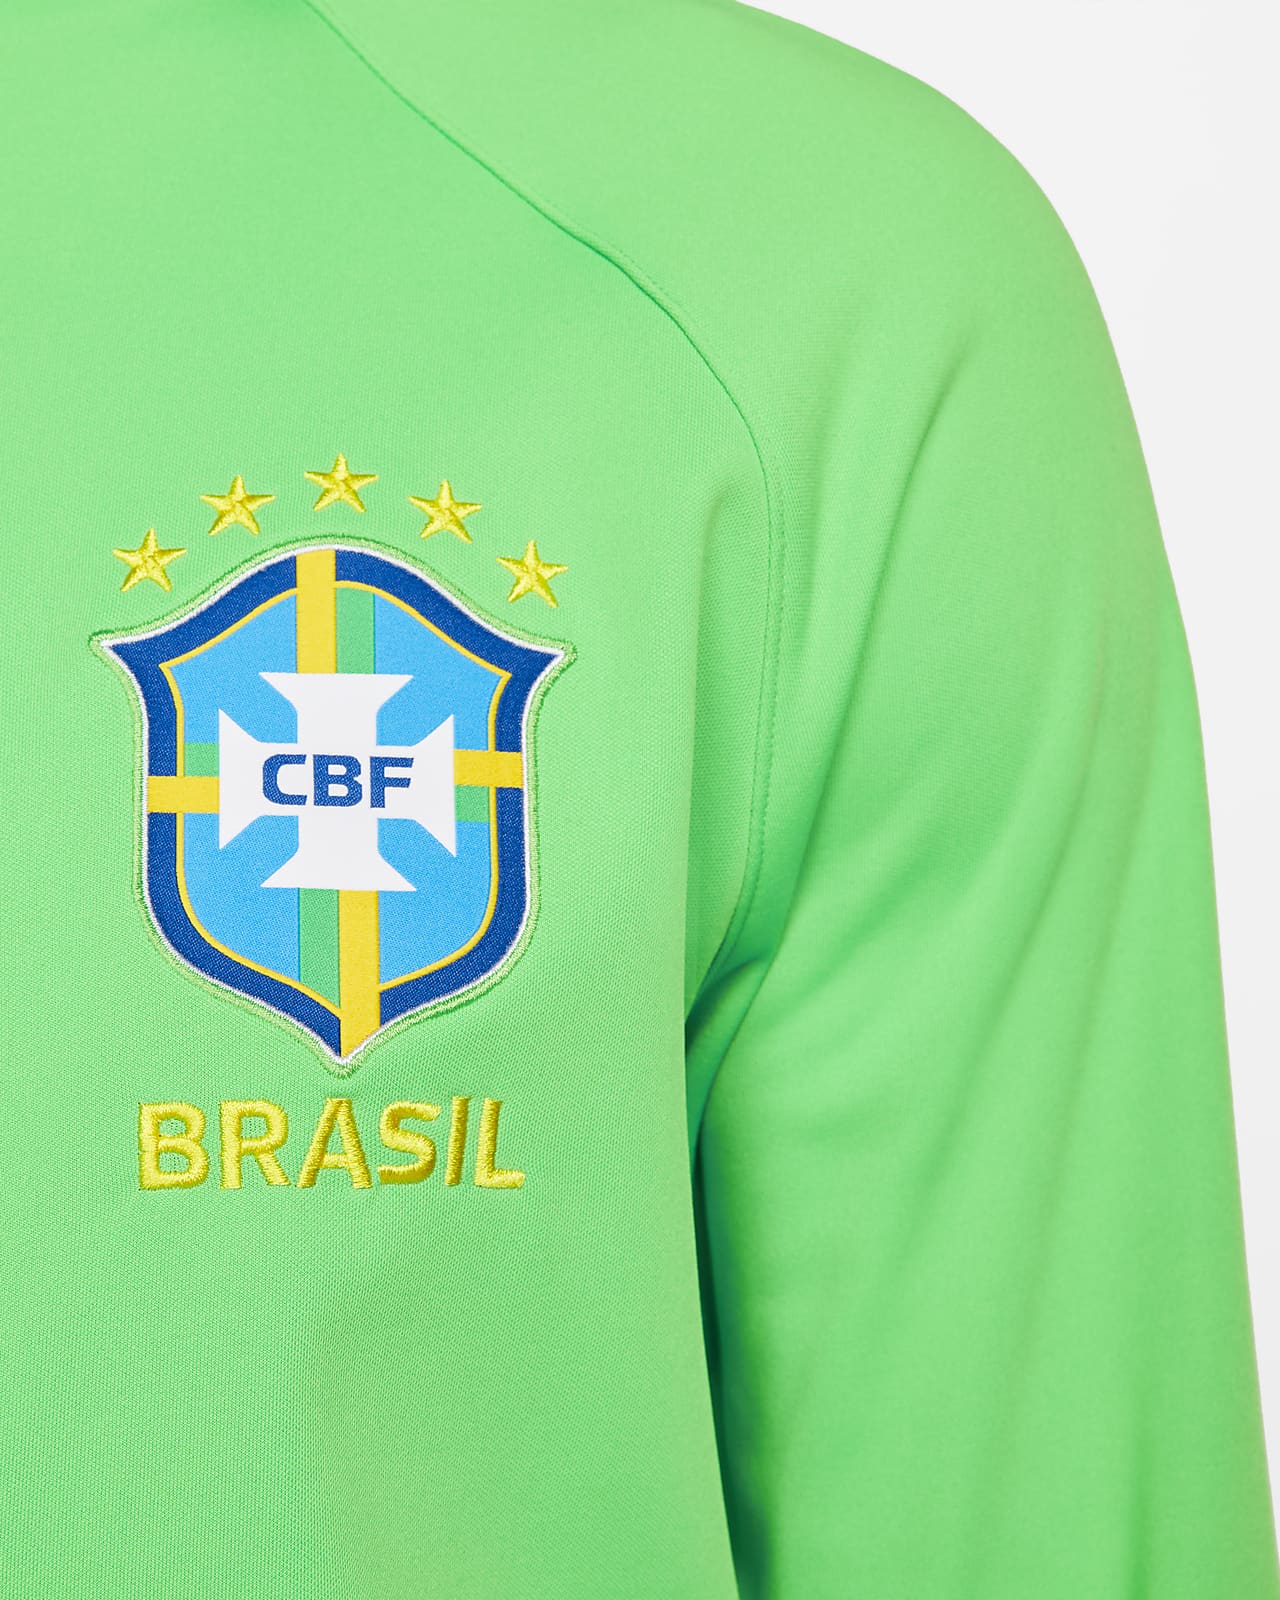 New, Nike CBF Brazil Team Jacket Large, mspr $125.00 for Sale in